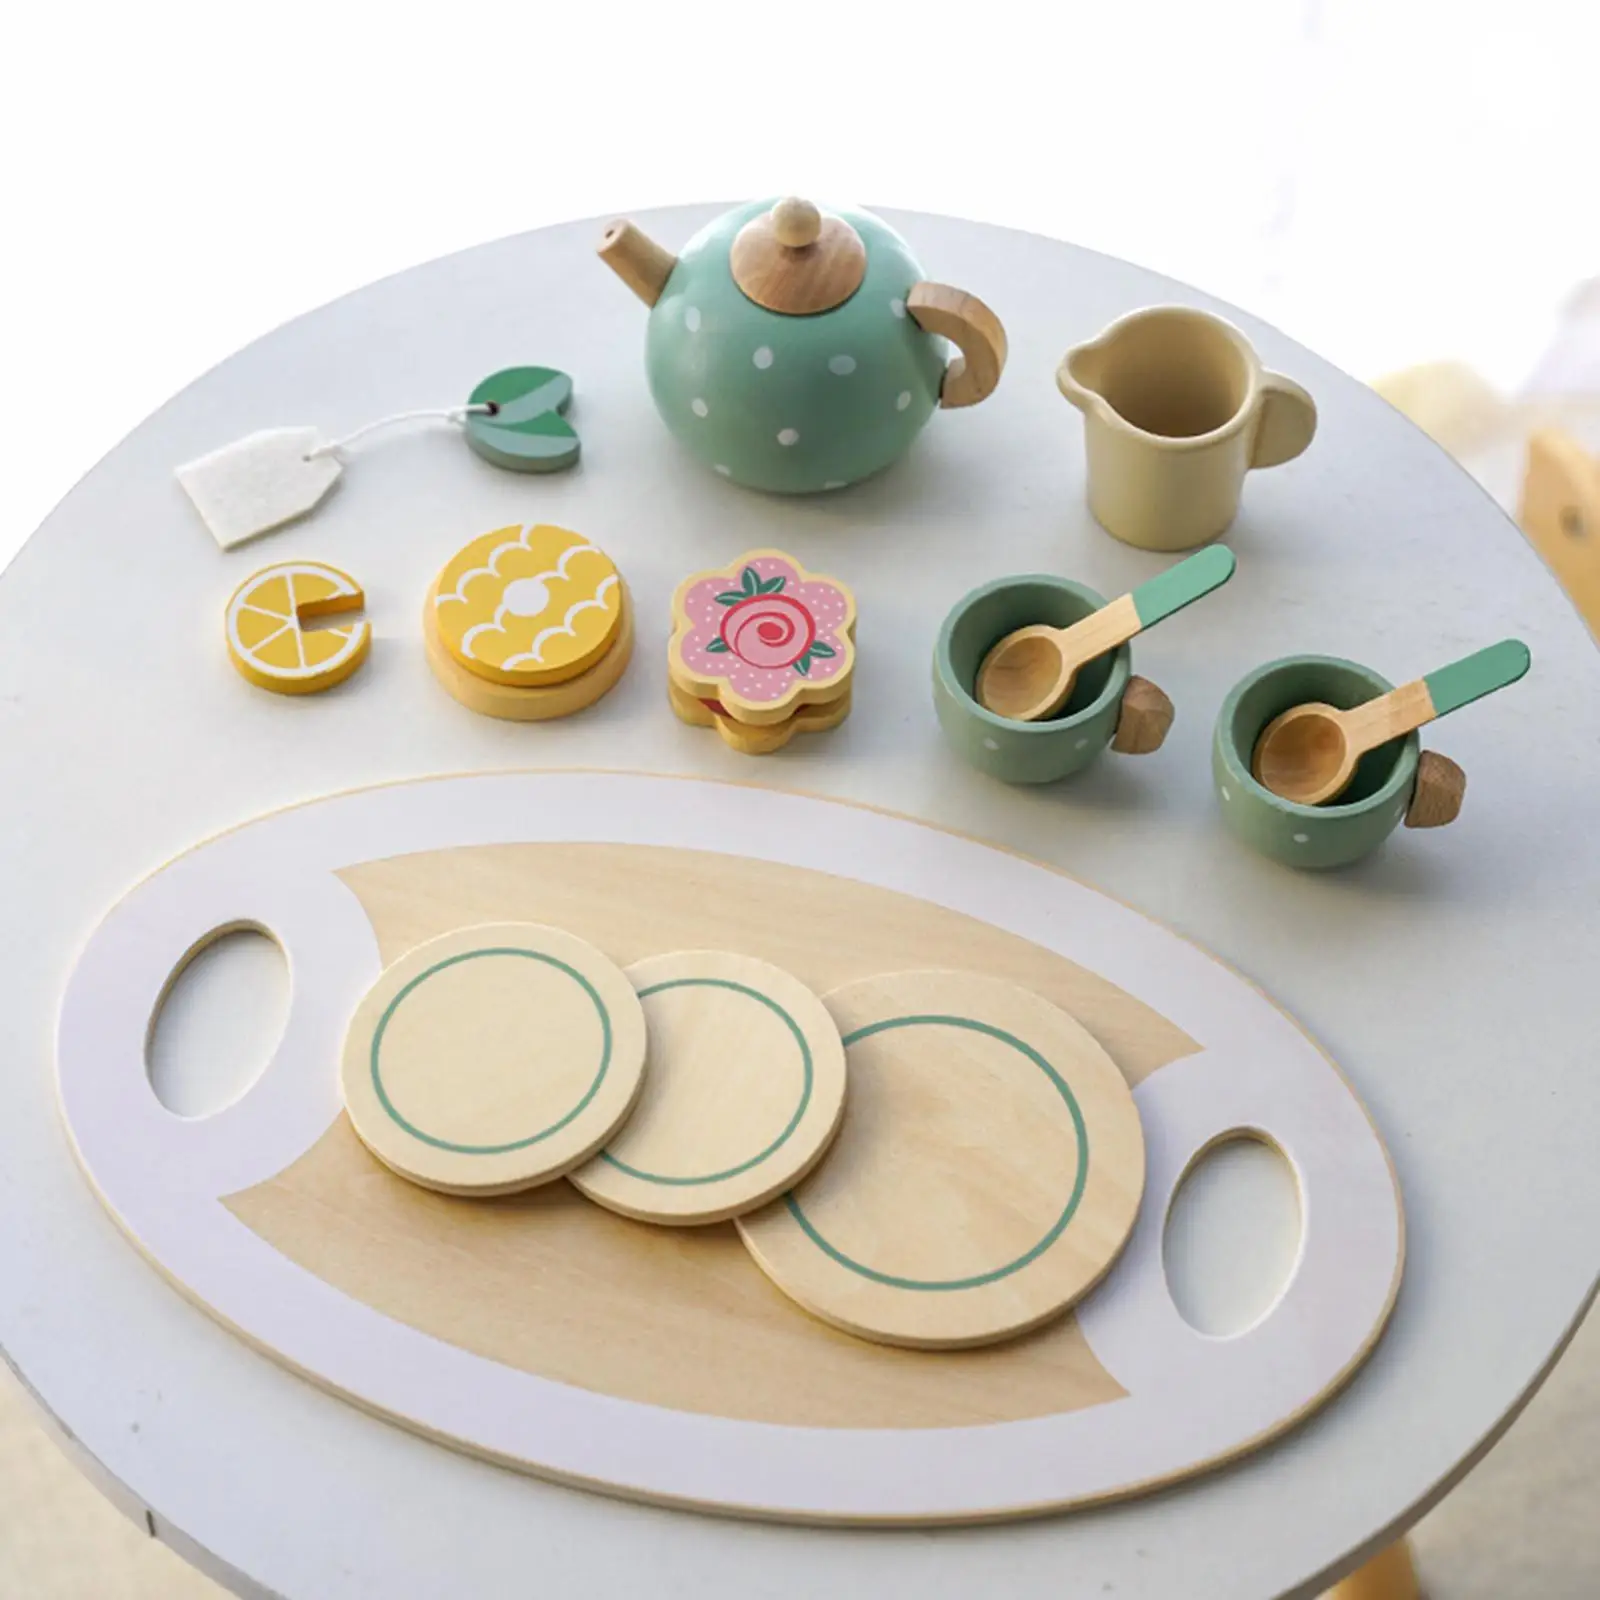 15x Tea Party Tableware Kitchen Playset for Boy Girl Birthday Gift